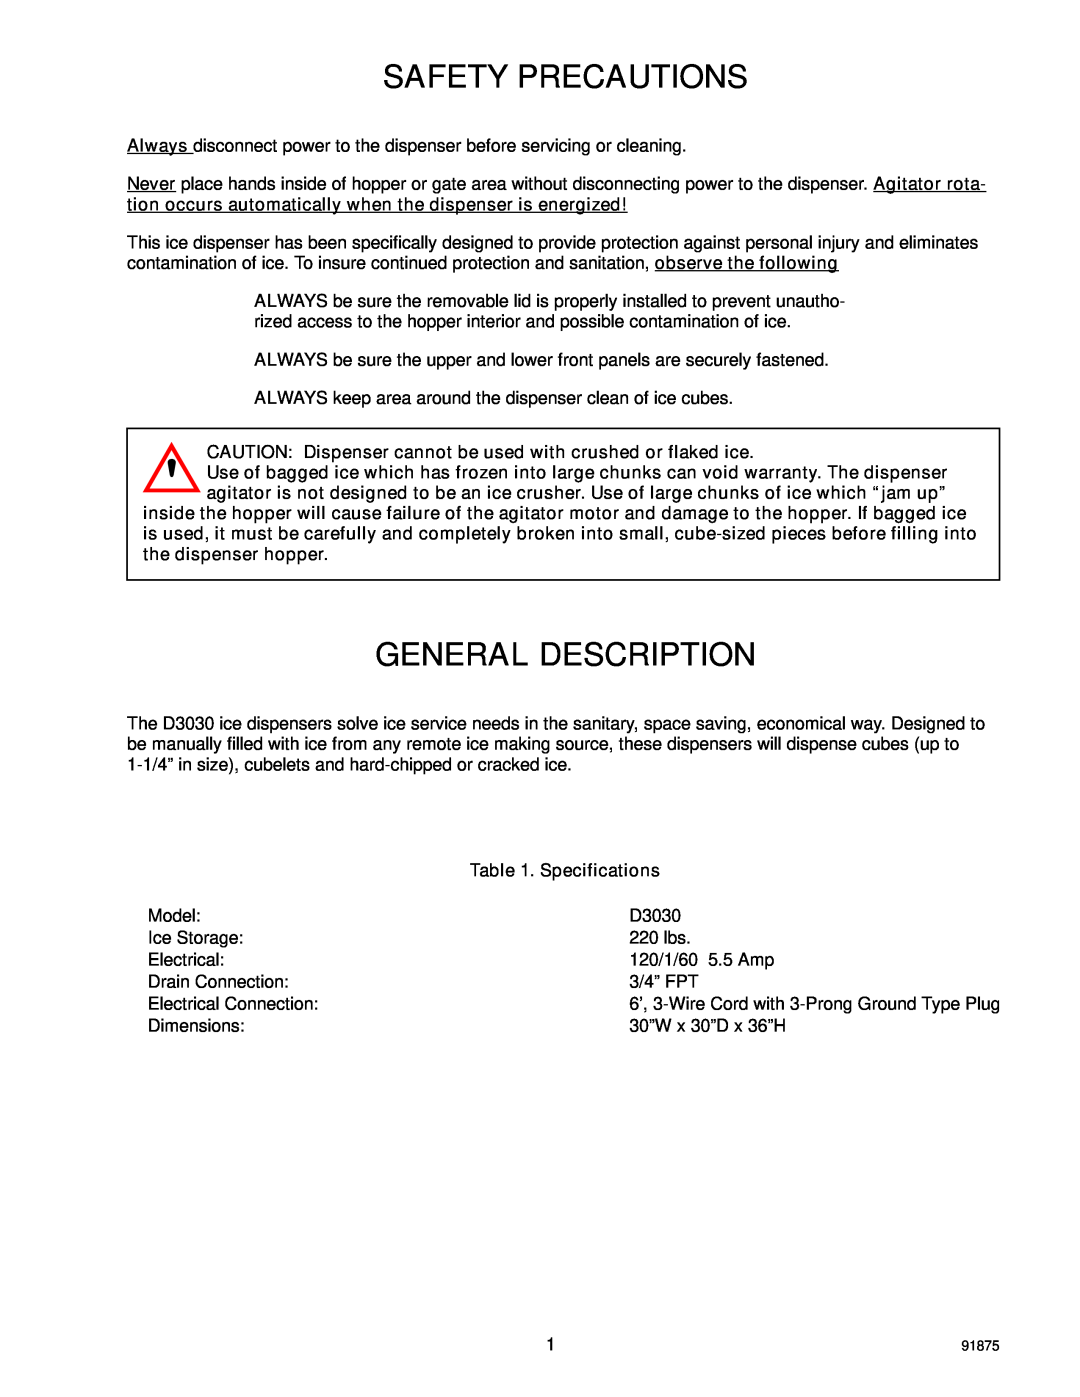 Cornelius D3030 manual Safety Precautions, General Description, Specifications 